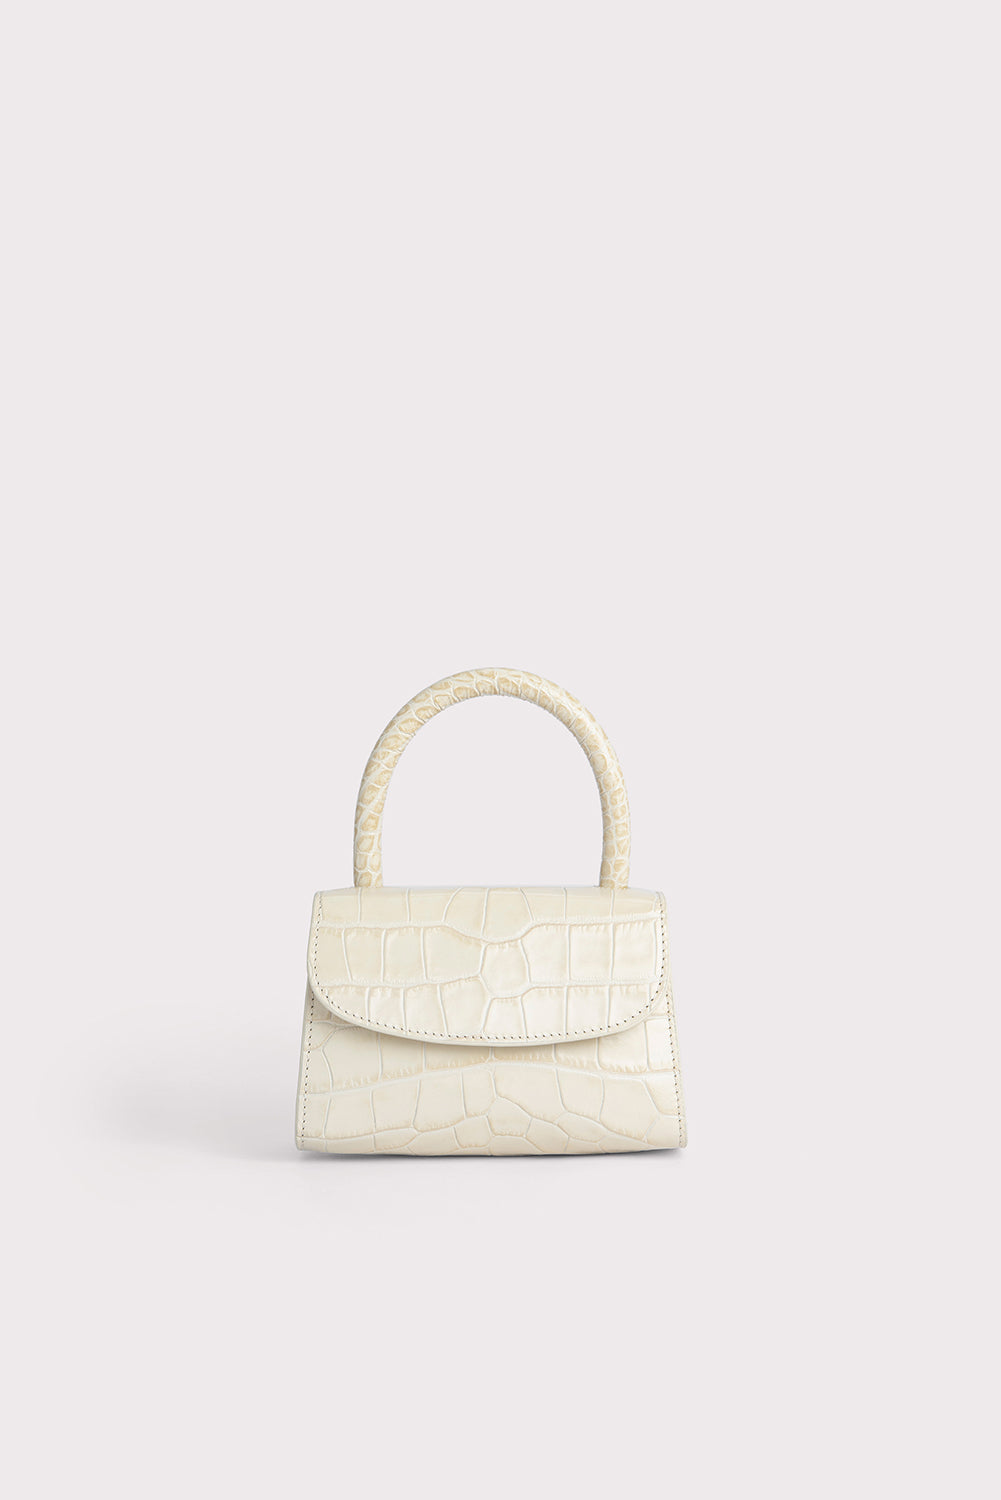 BY FAR Off-White Croc Mini Bag – BlackSkinny